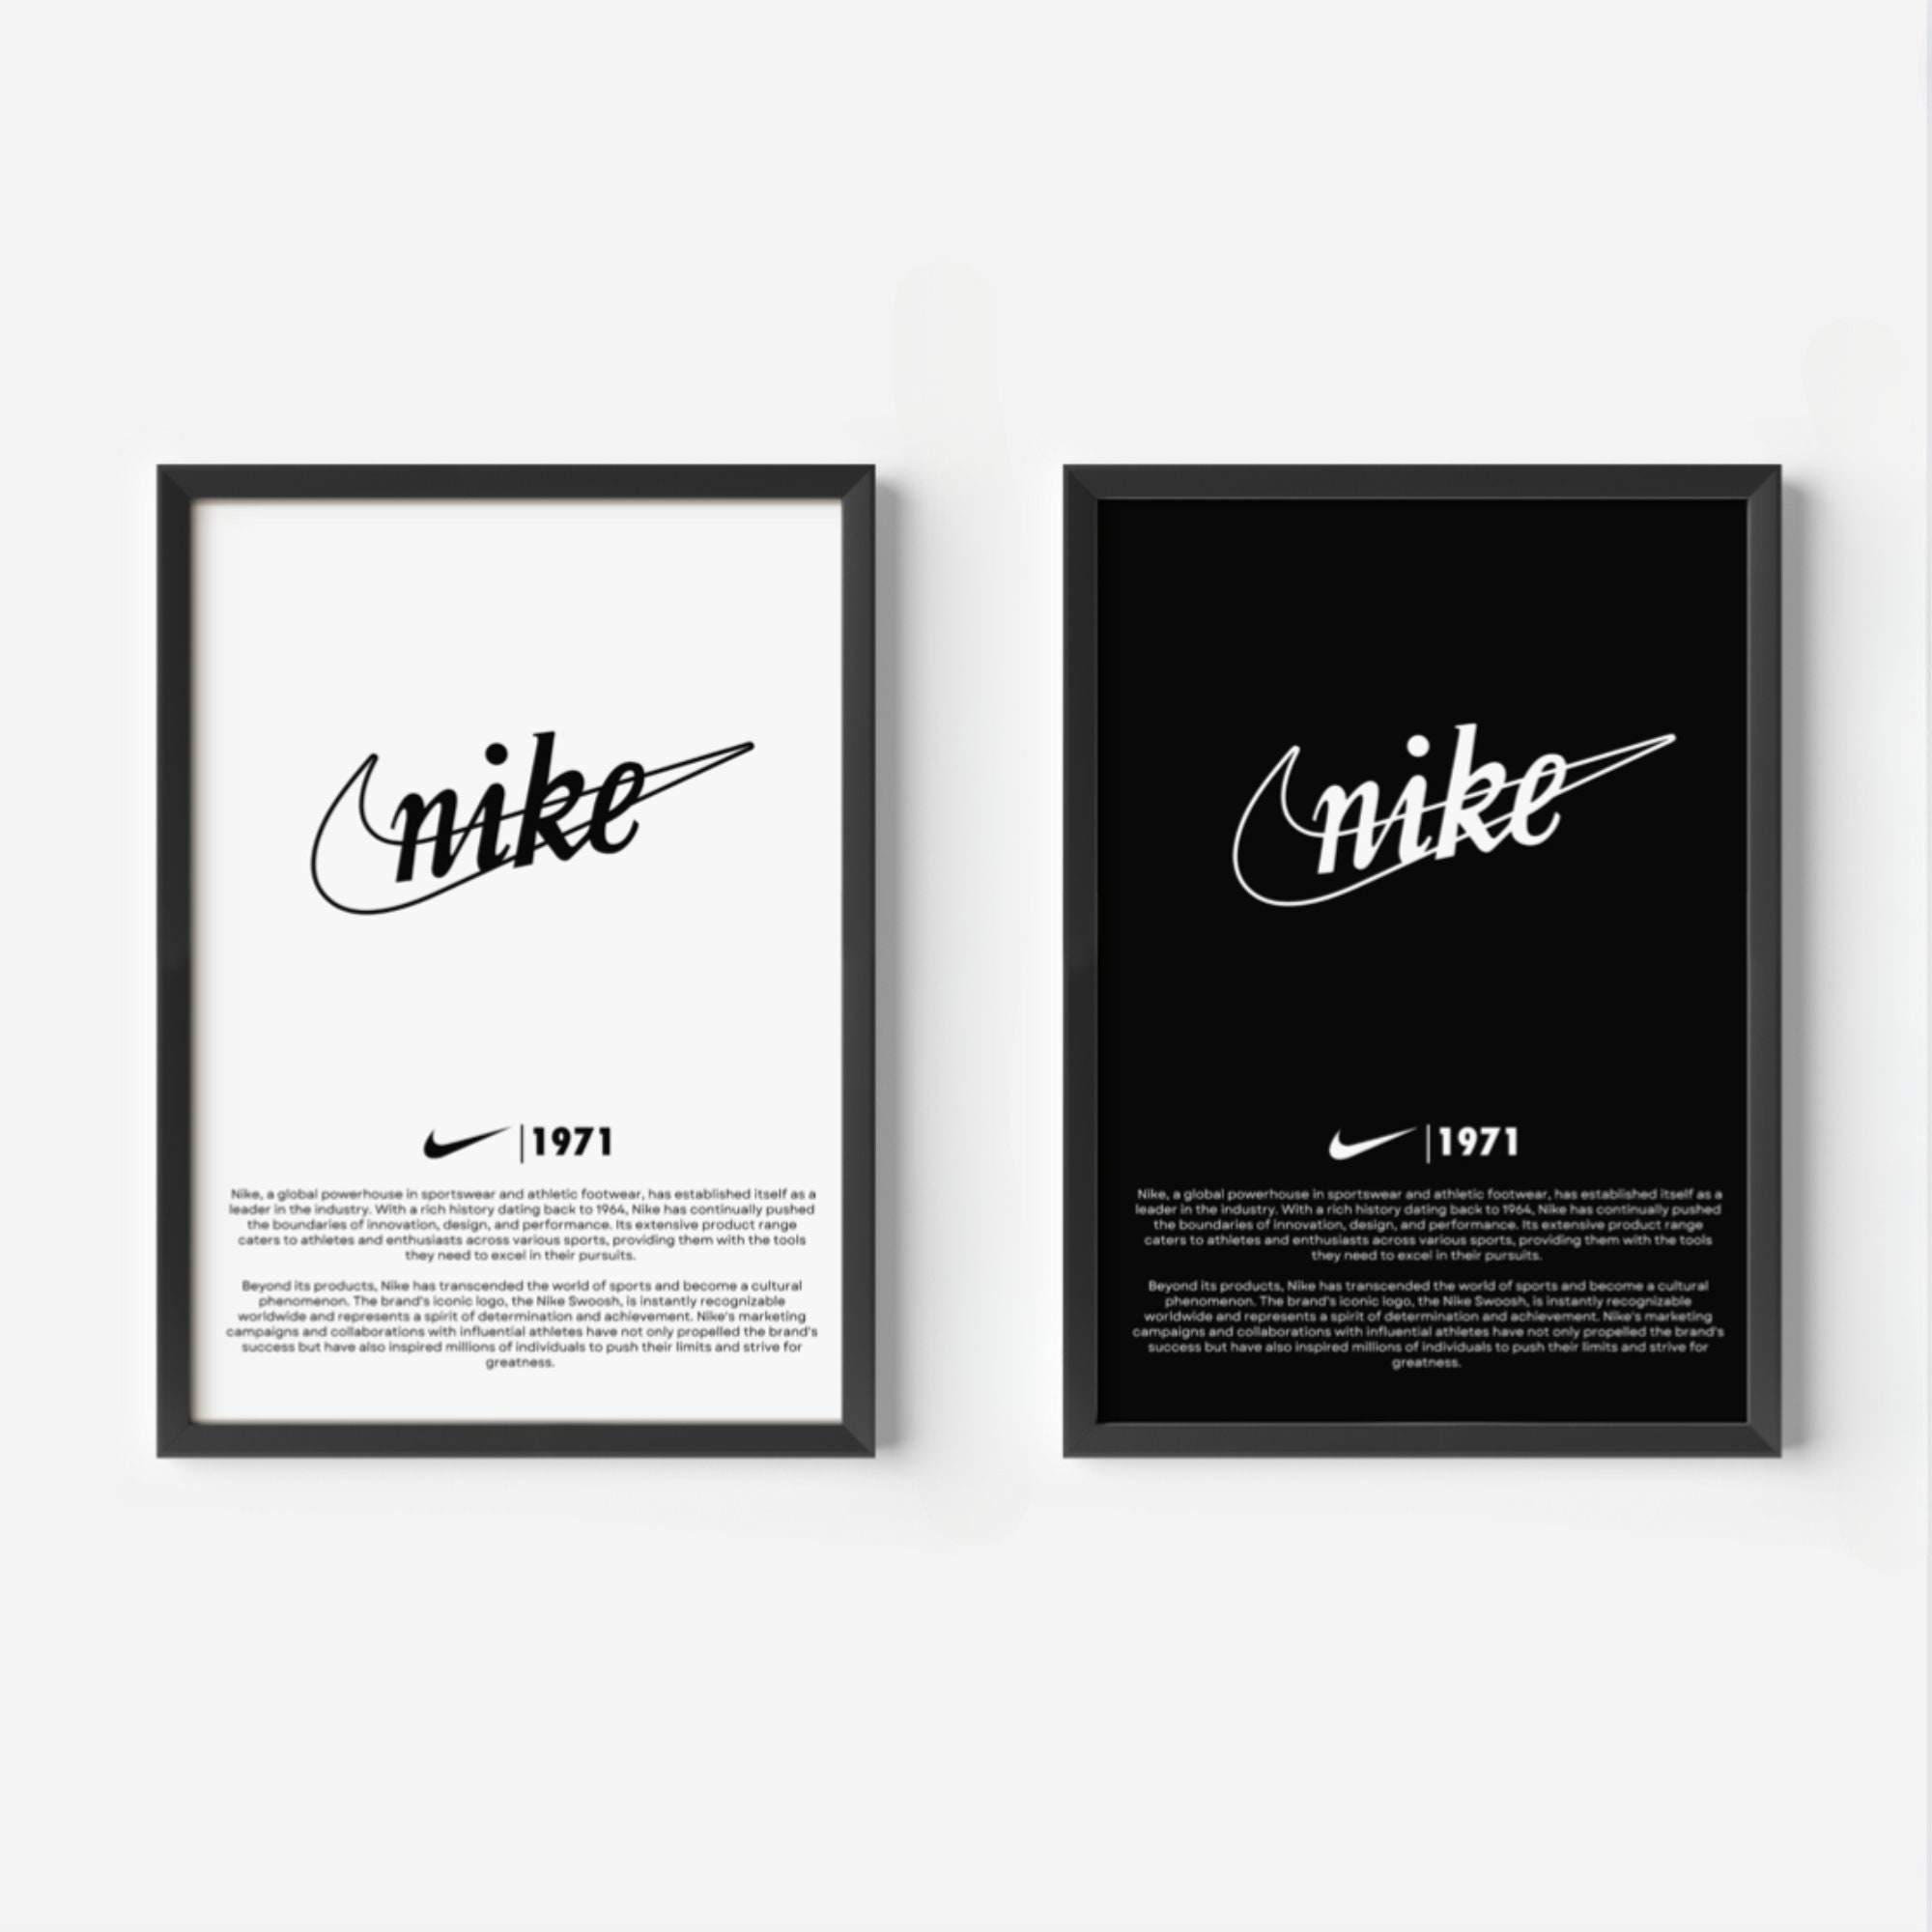 Nike Logo, History & Branding: Business Logic in Simple Swoosh Logo